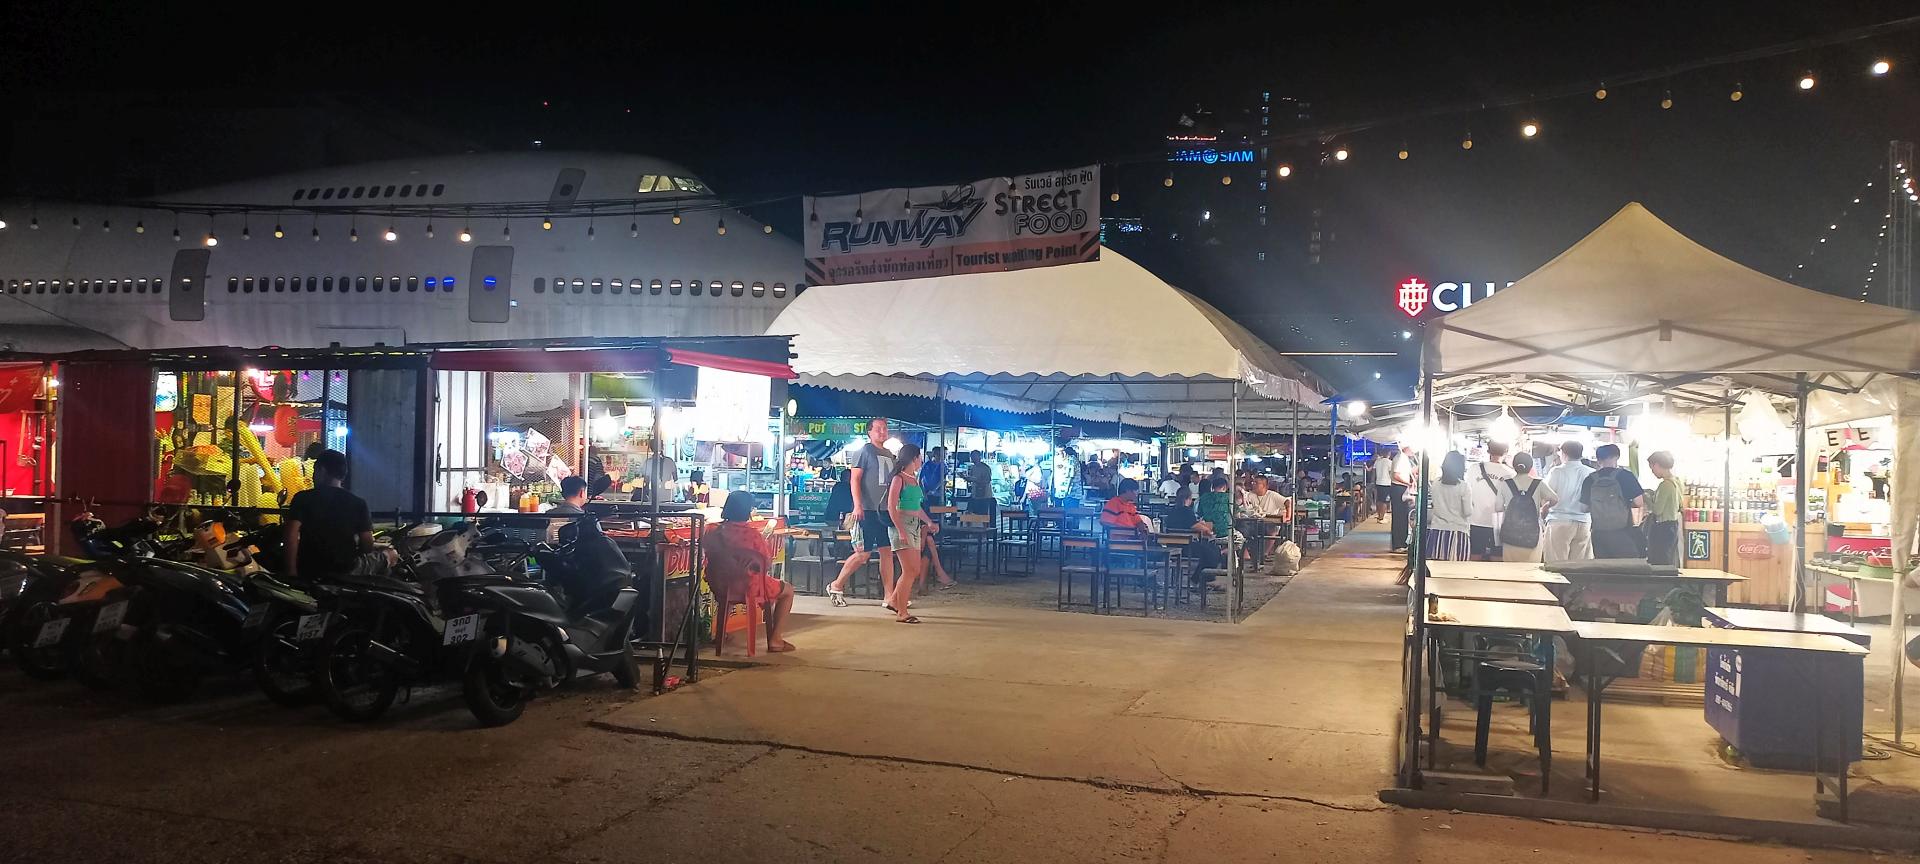 Runway Street Food, Second Road Pattaya